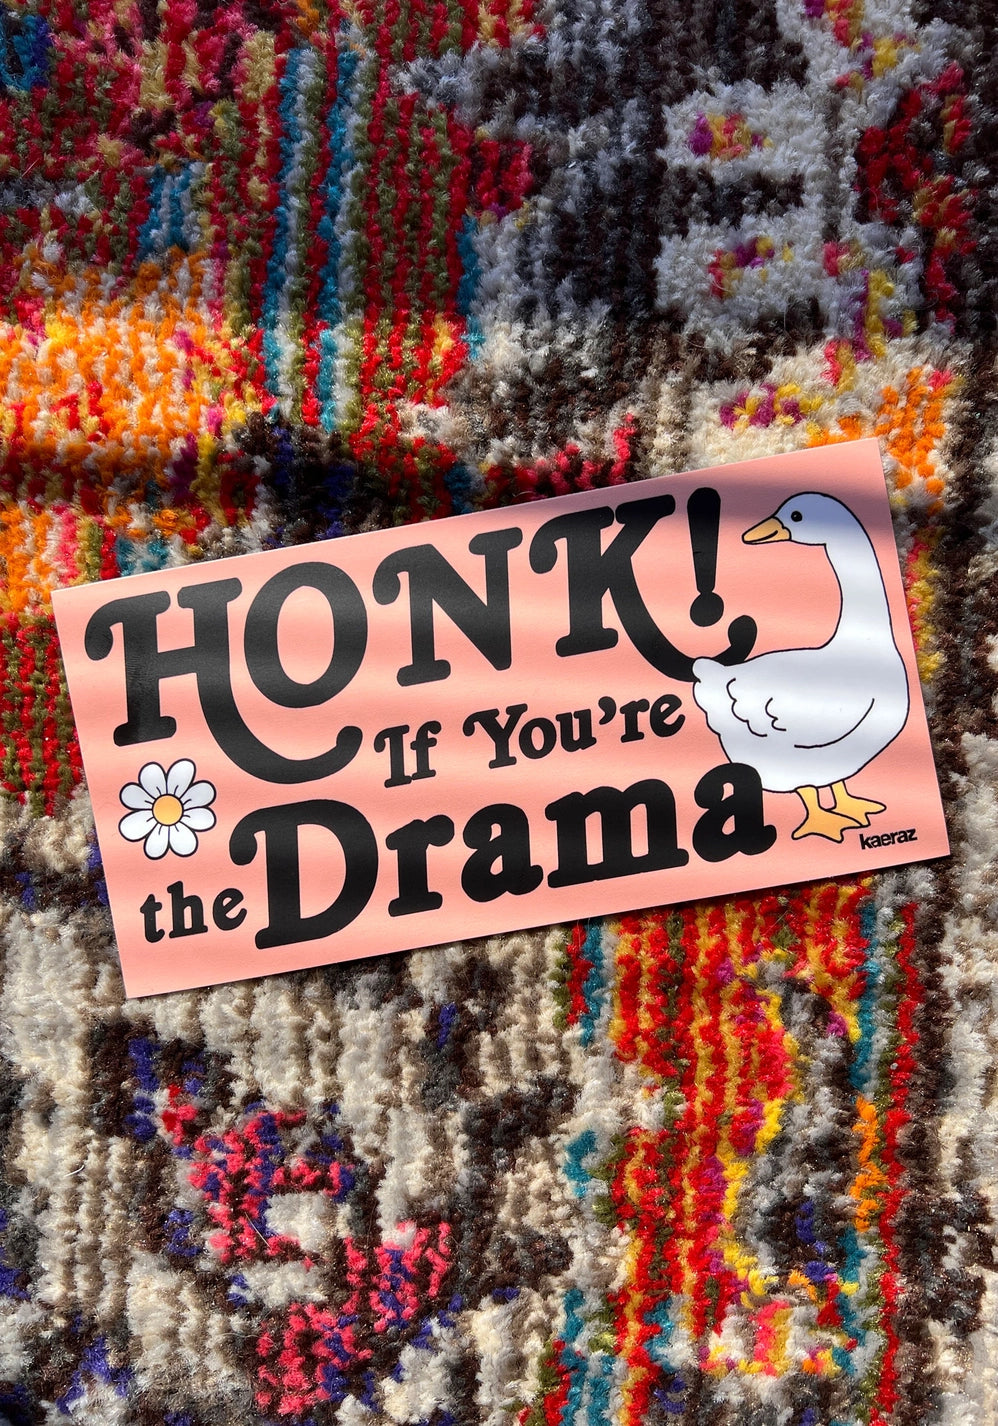 Honk if You're the Drama Bumper Sticker